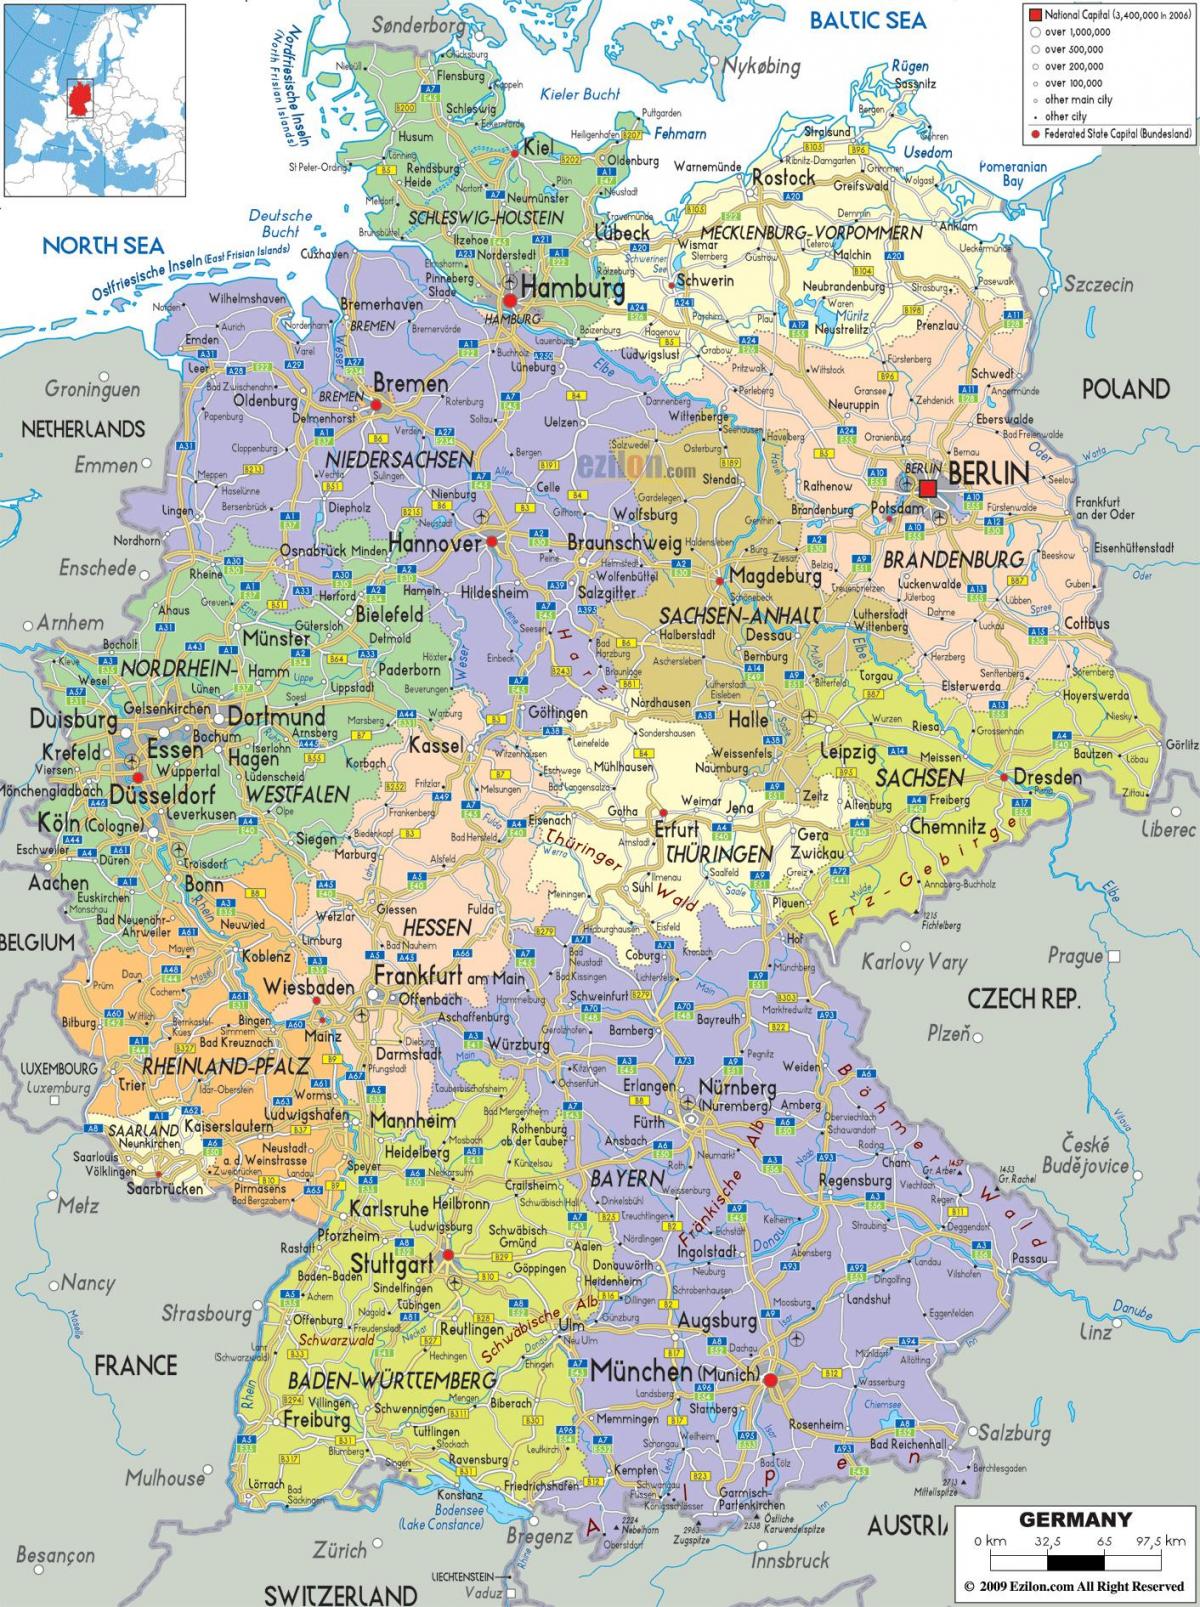 Tyskland city-map - Kort byer i Tyskland (det Vestlige Europa - Europa)